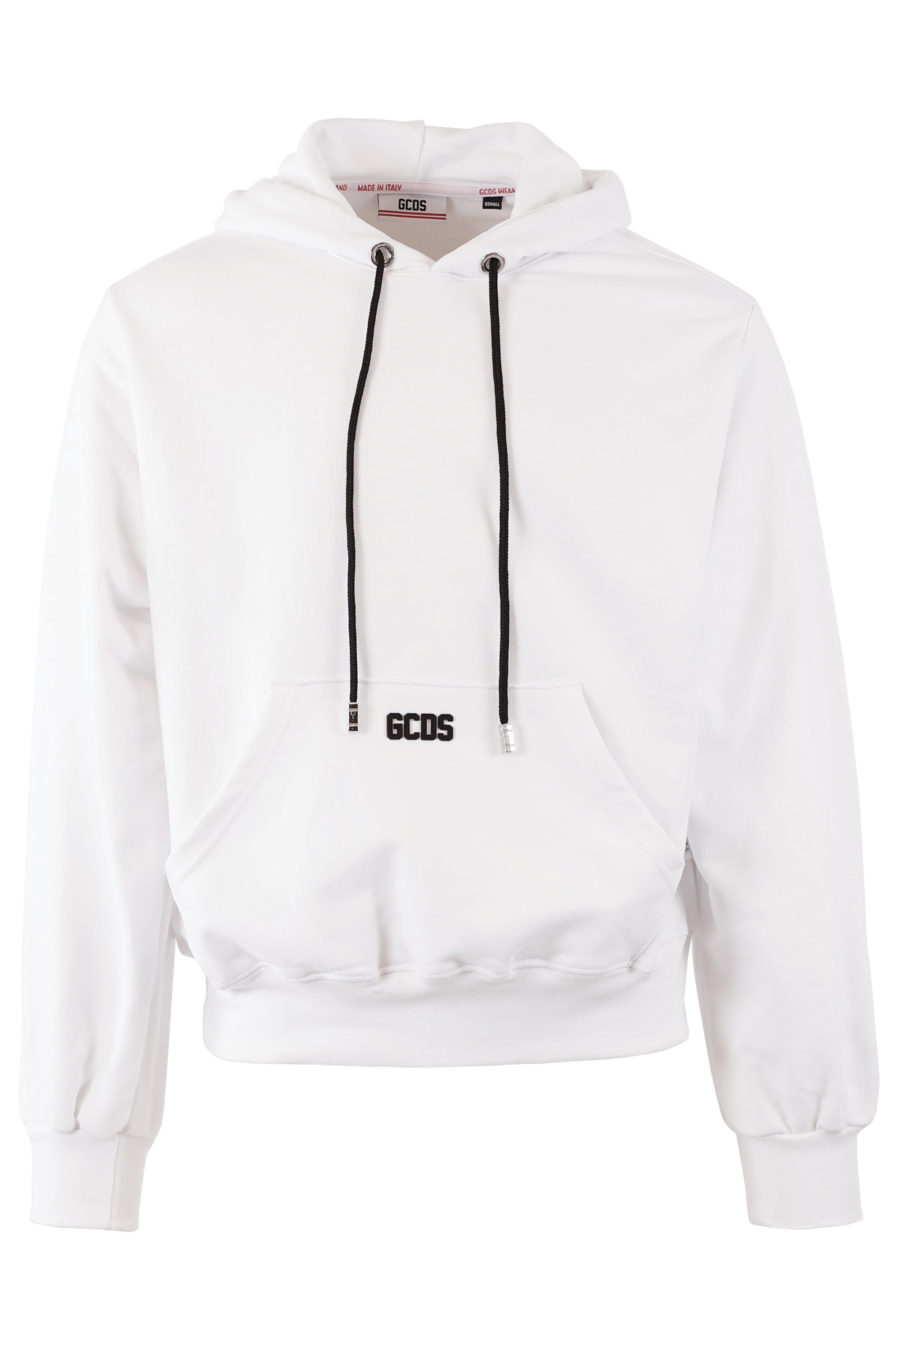 Sudadera blanca con capucha con logo negro - IMG 7663